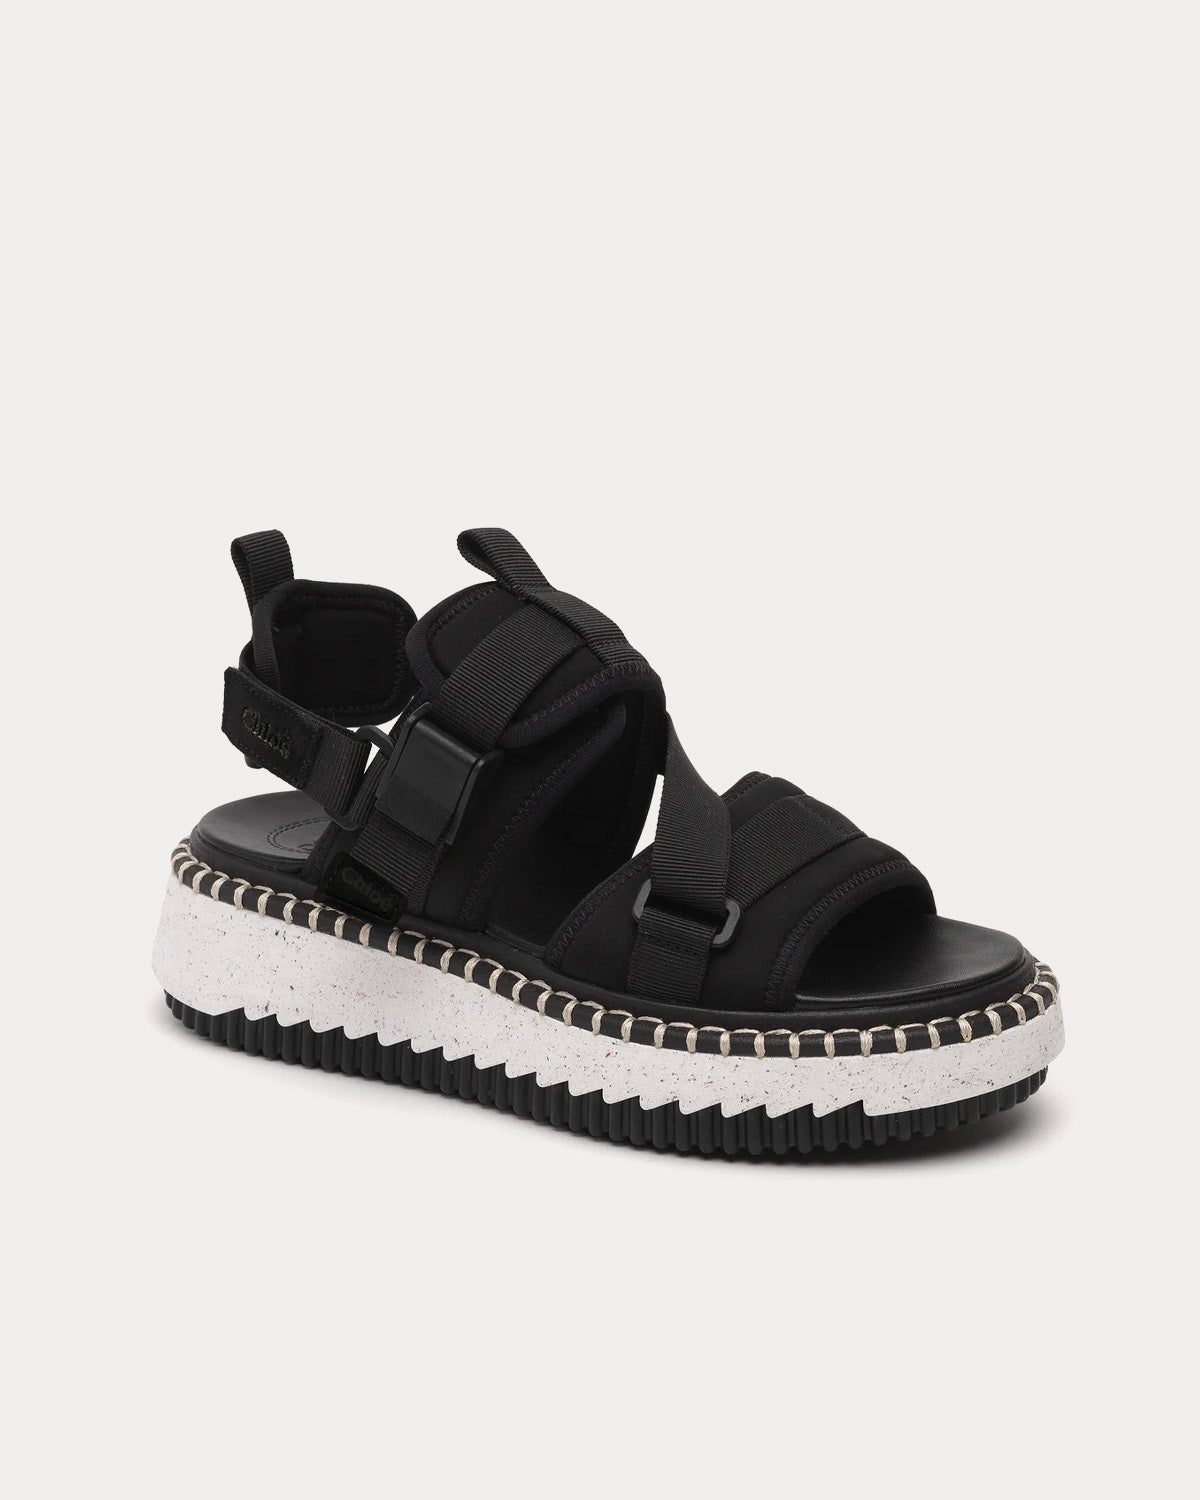 Chloé - Lilli Flat Nomad Black Sandals